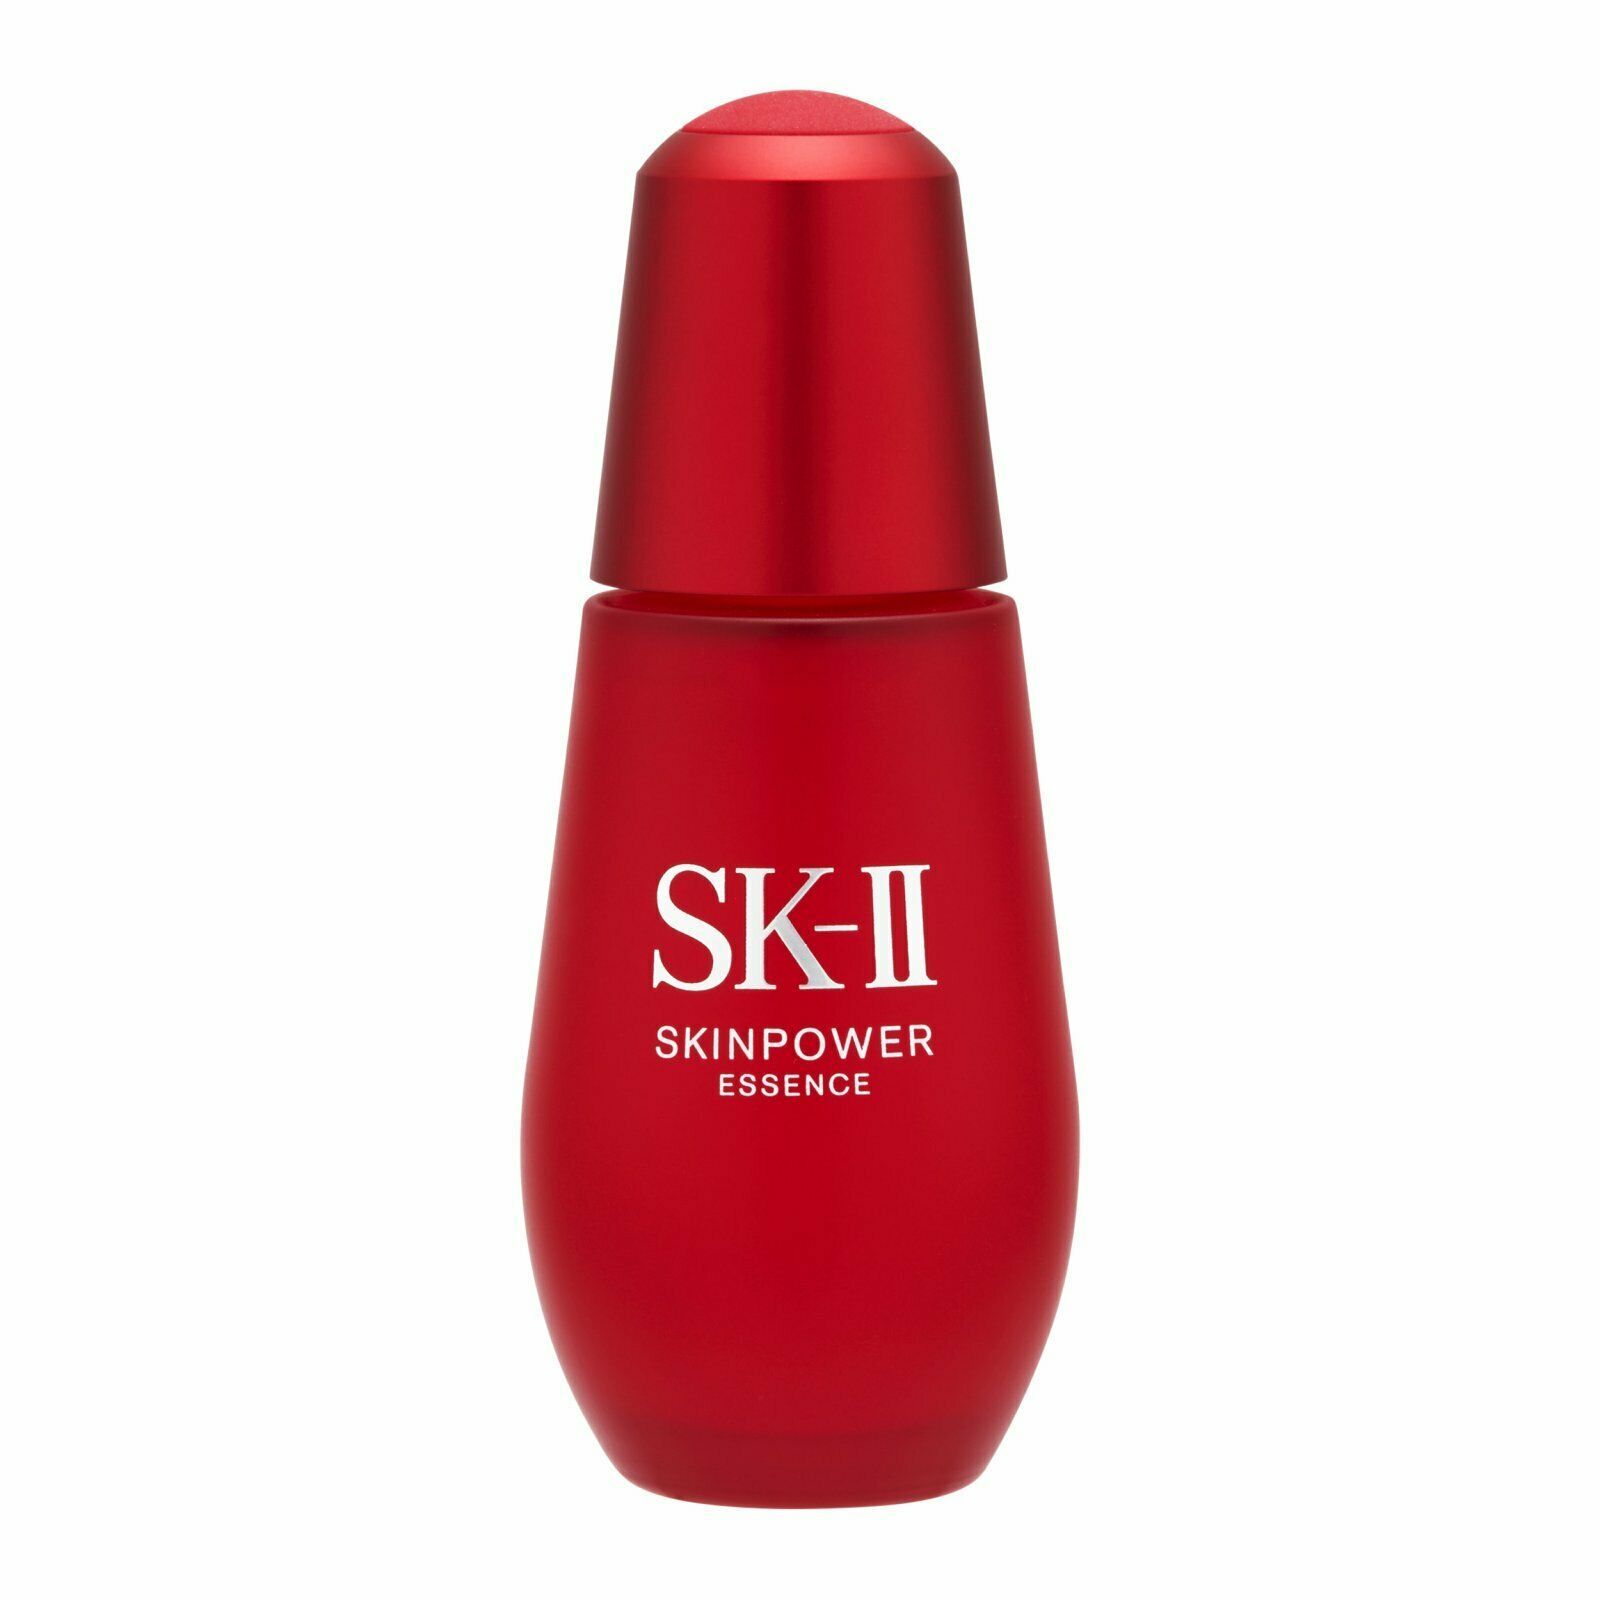 SK-II Skinpower Essence 50ml PITERA SKIN POWER ANTI-AGING SKII SK2 Japan - $139.99